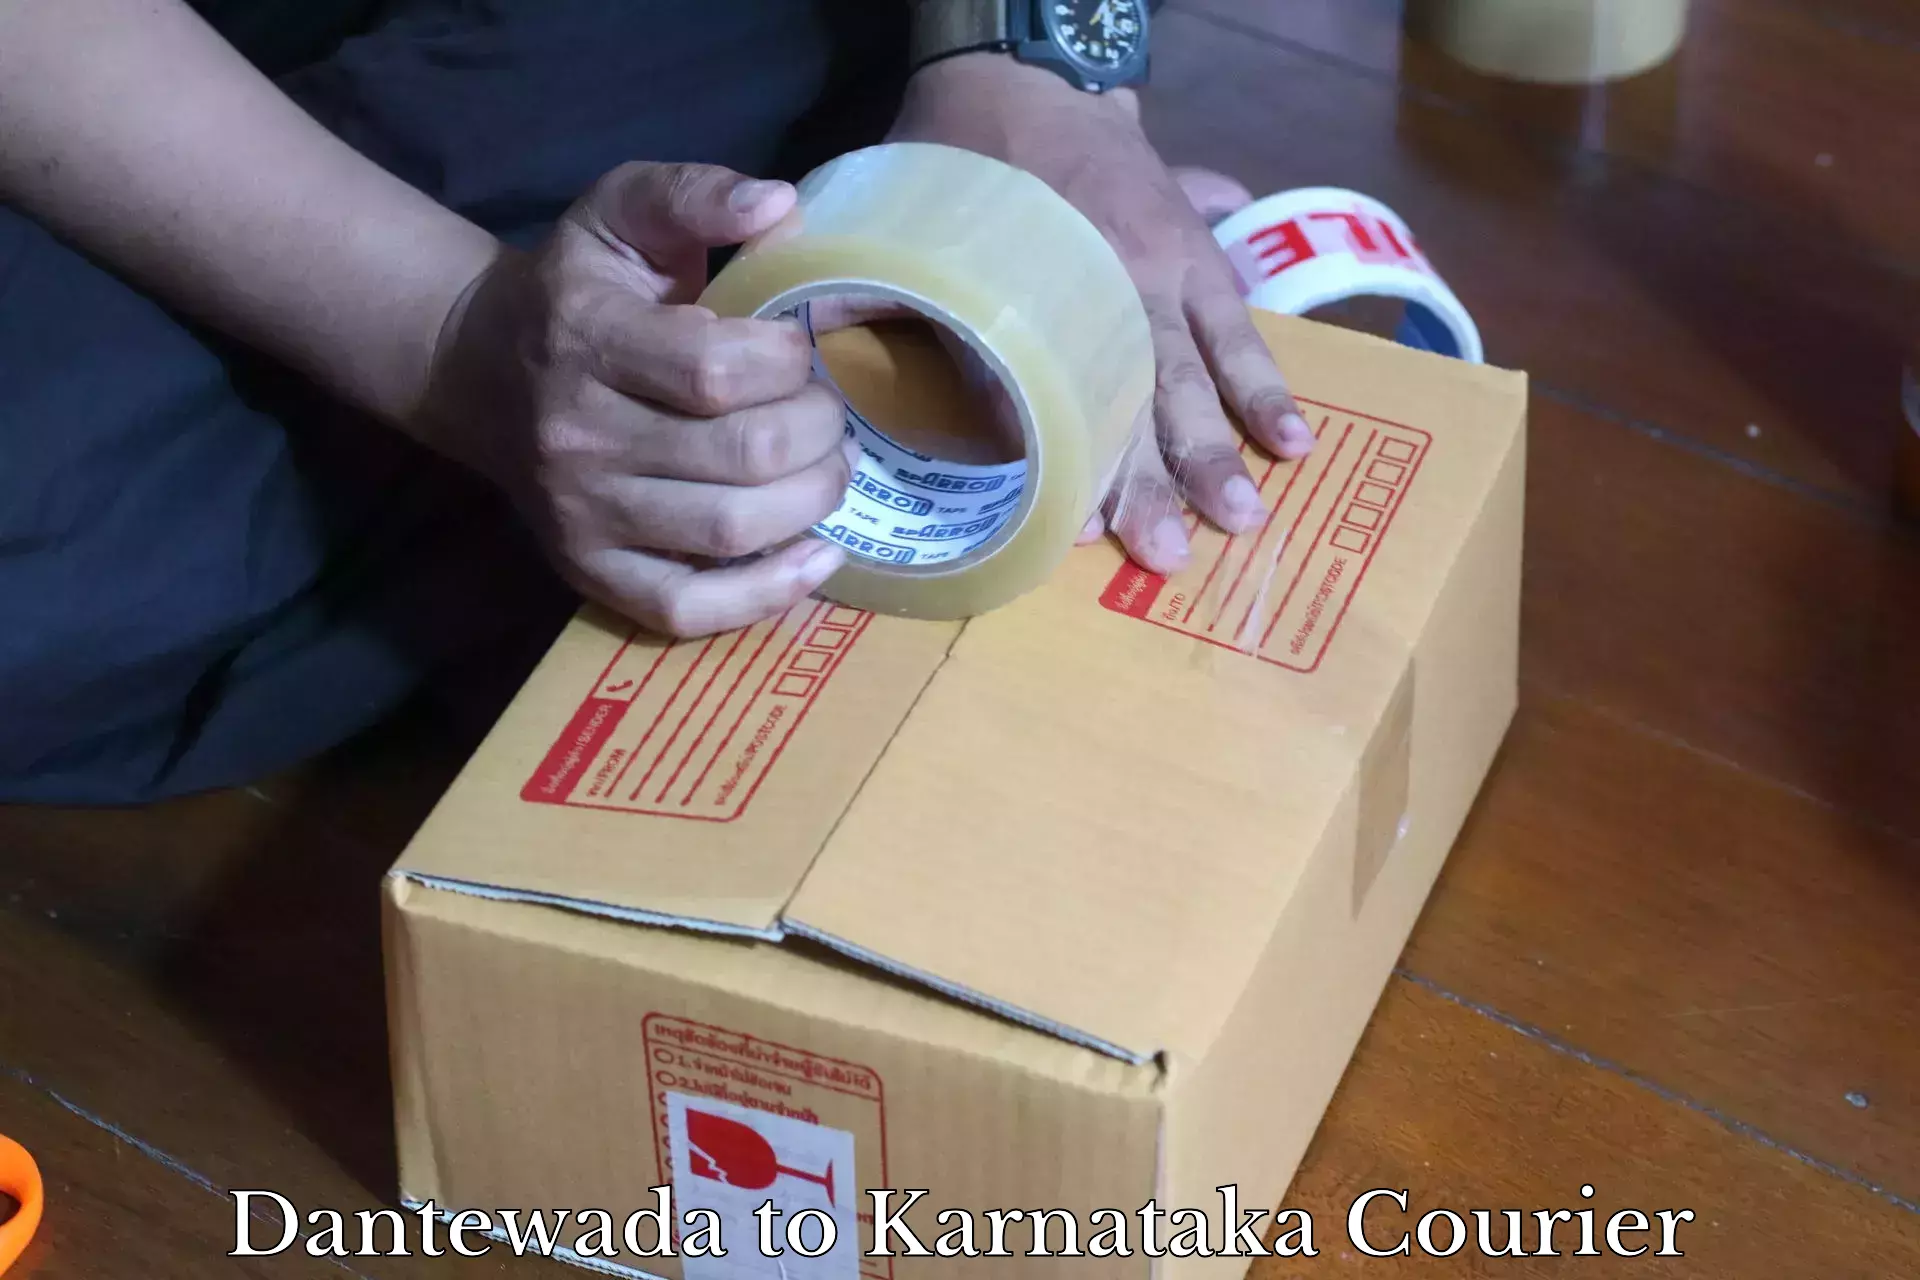 On-call courier service Dantewada to Karnataka